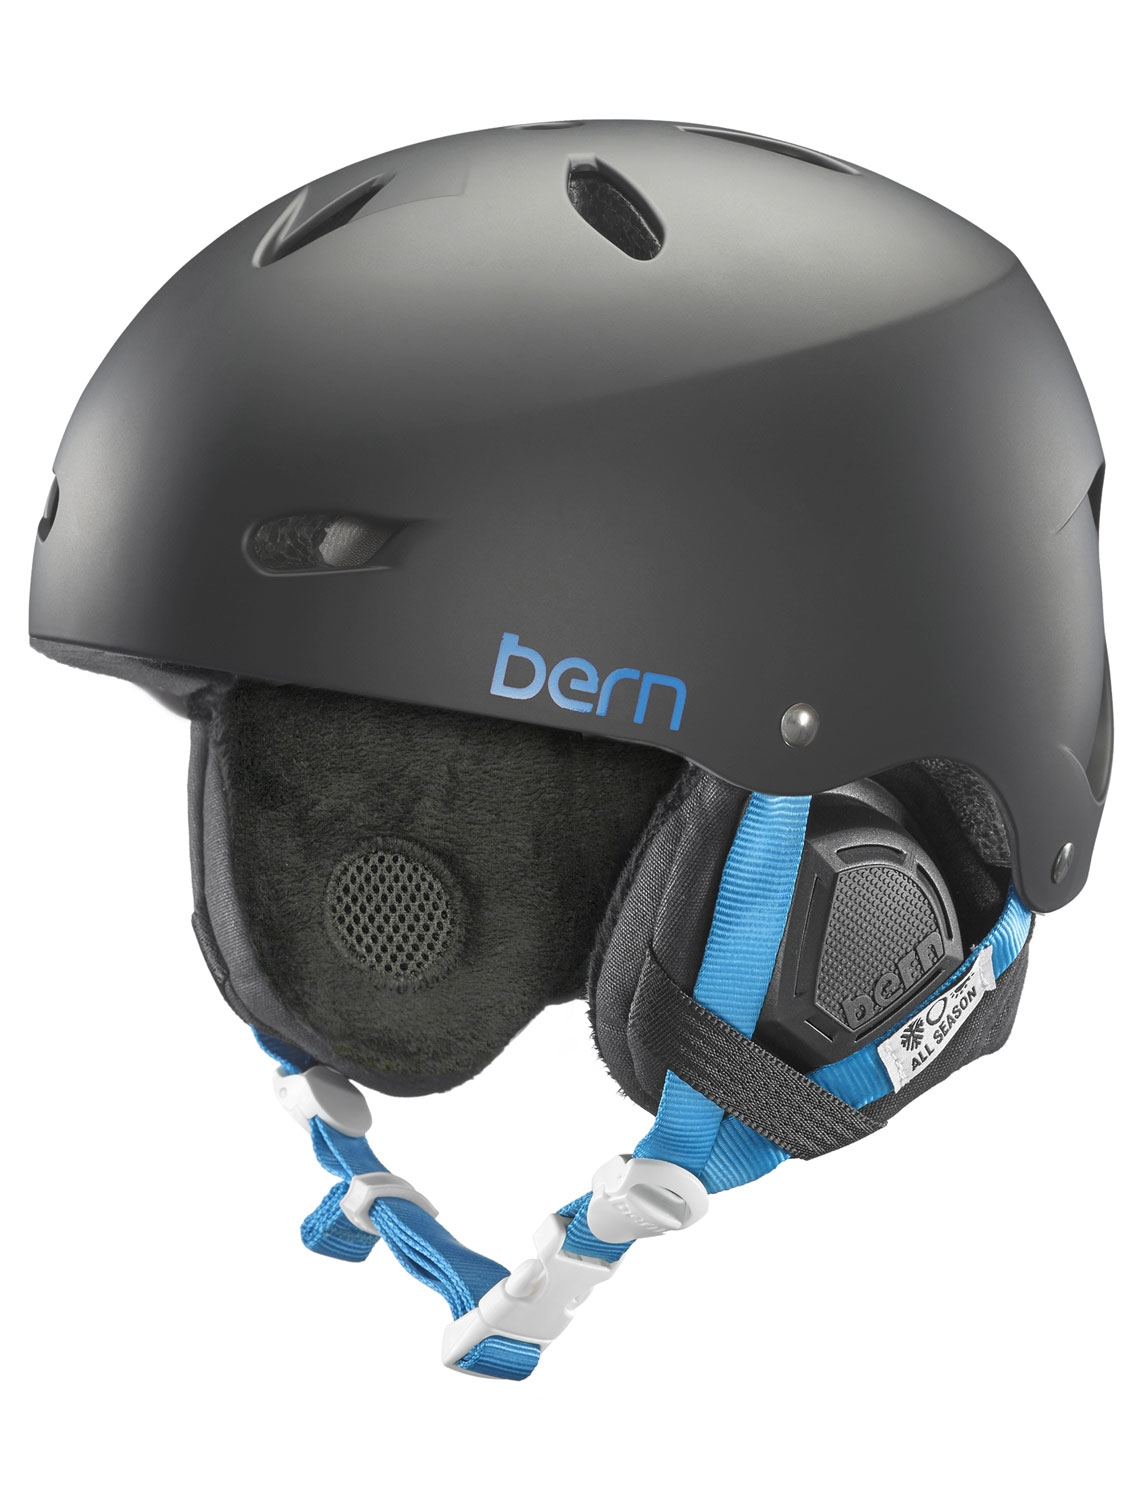 Brighton Eps Helmet With Liner